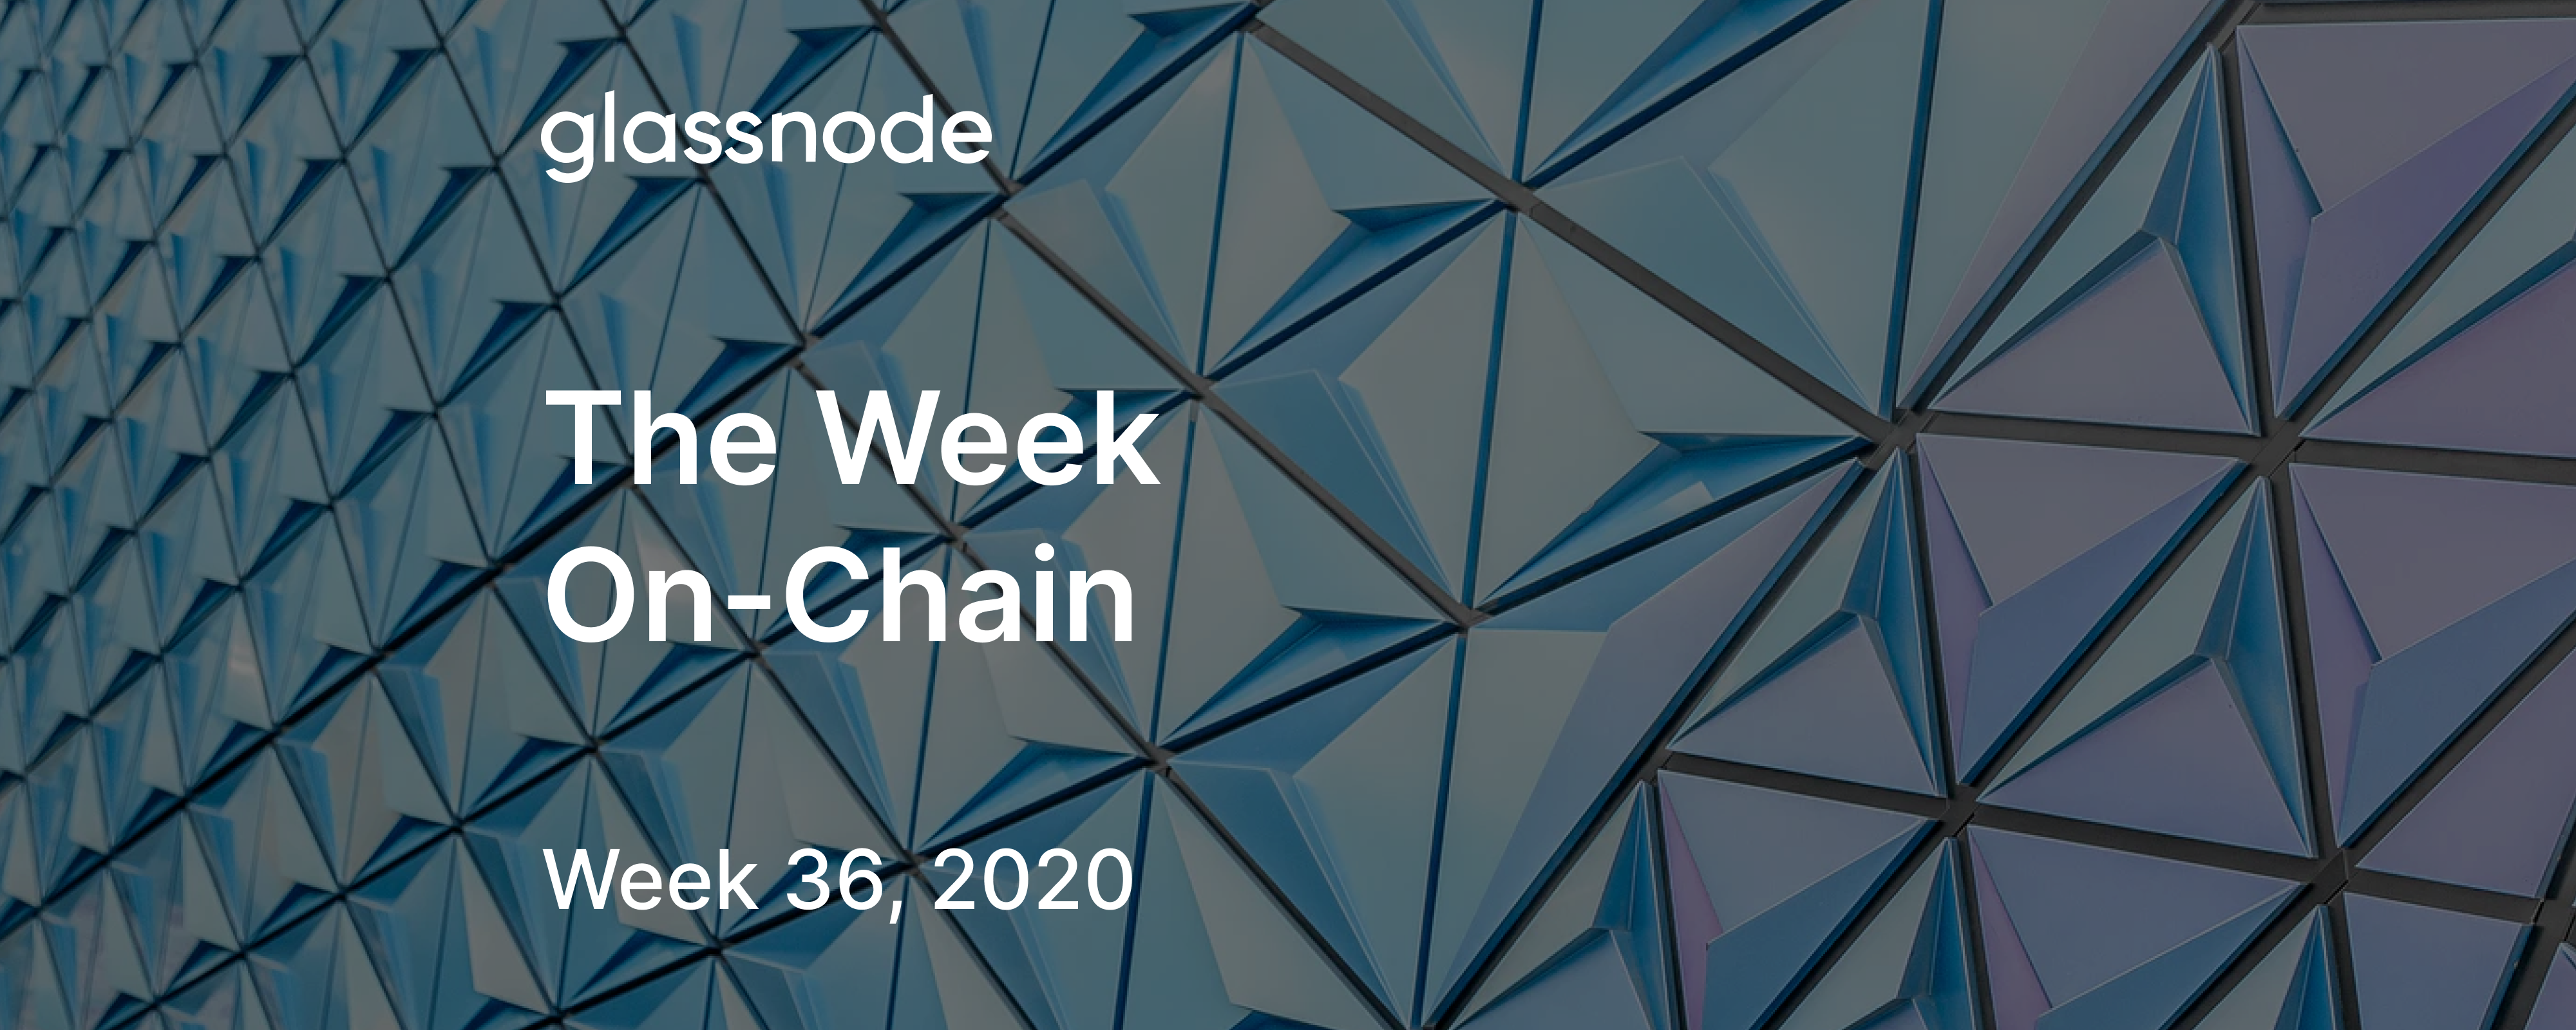 The Week On-Chain (Week 36, 2020)